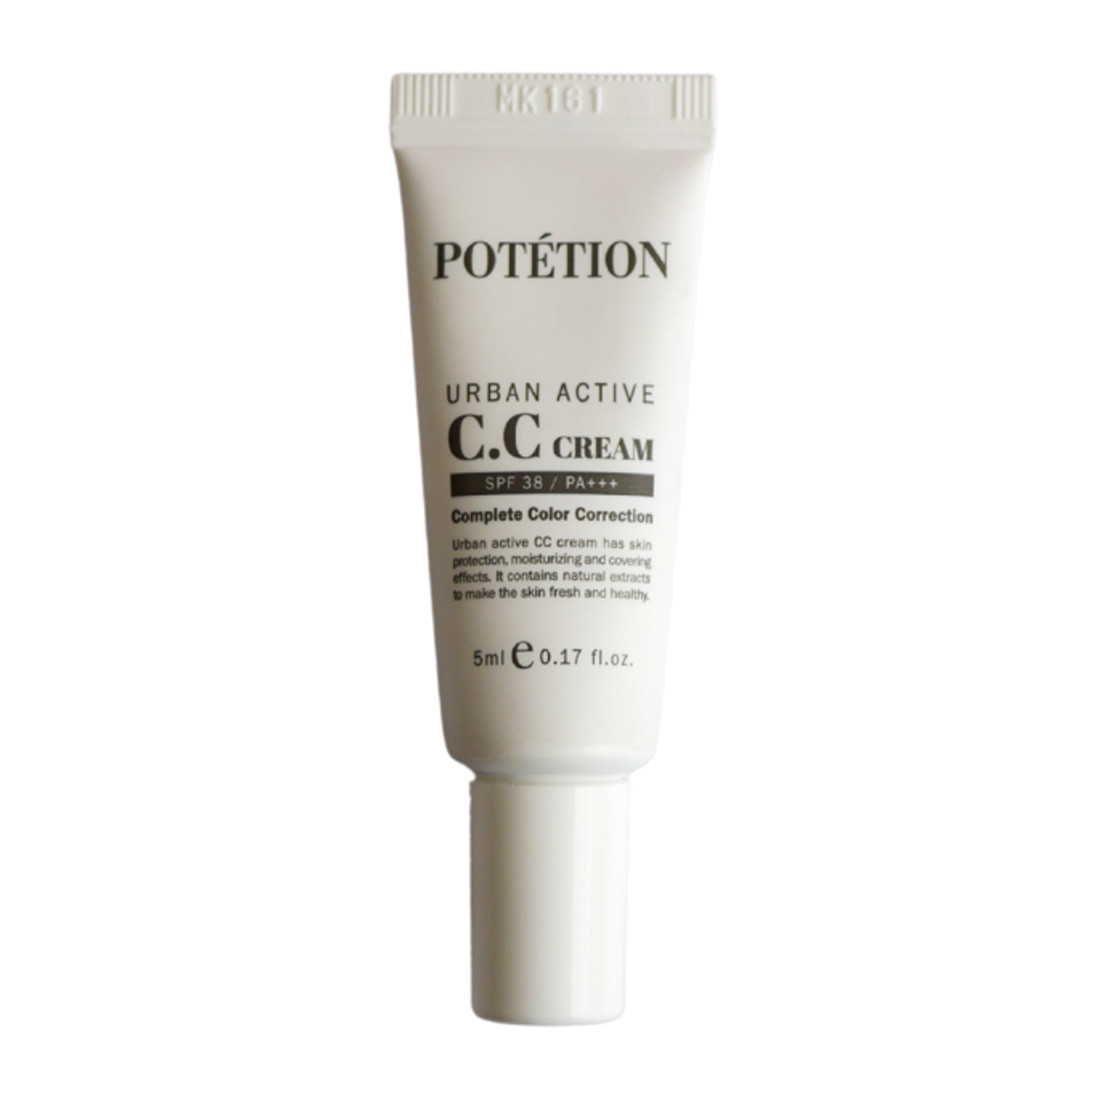 CC Крем для активной защиты кожи от солнца spf 38+ CU Skin Potetion Urban Active SPF38 PA+++ CC Cream